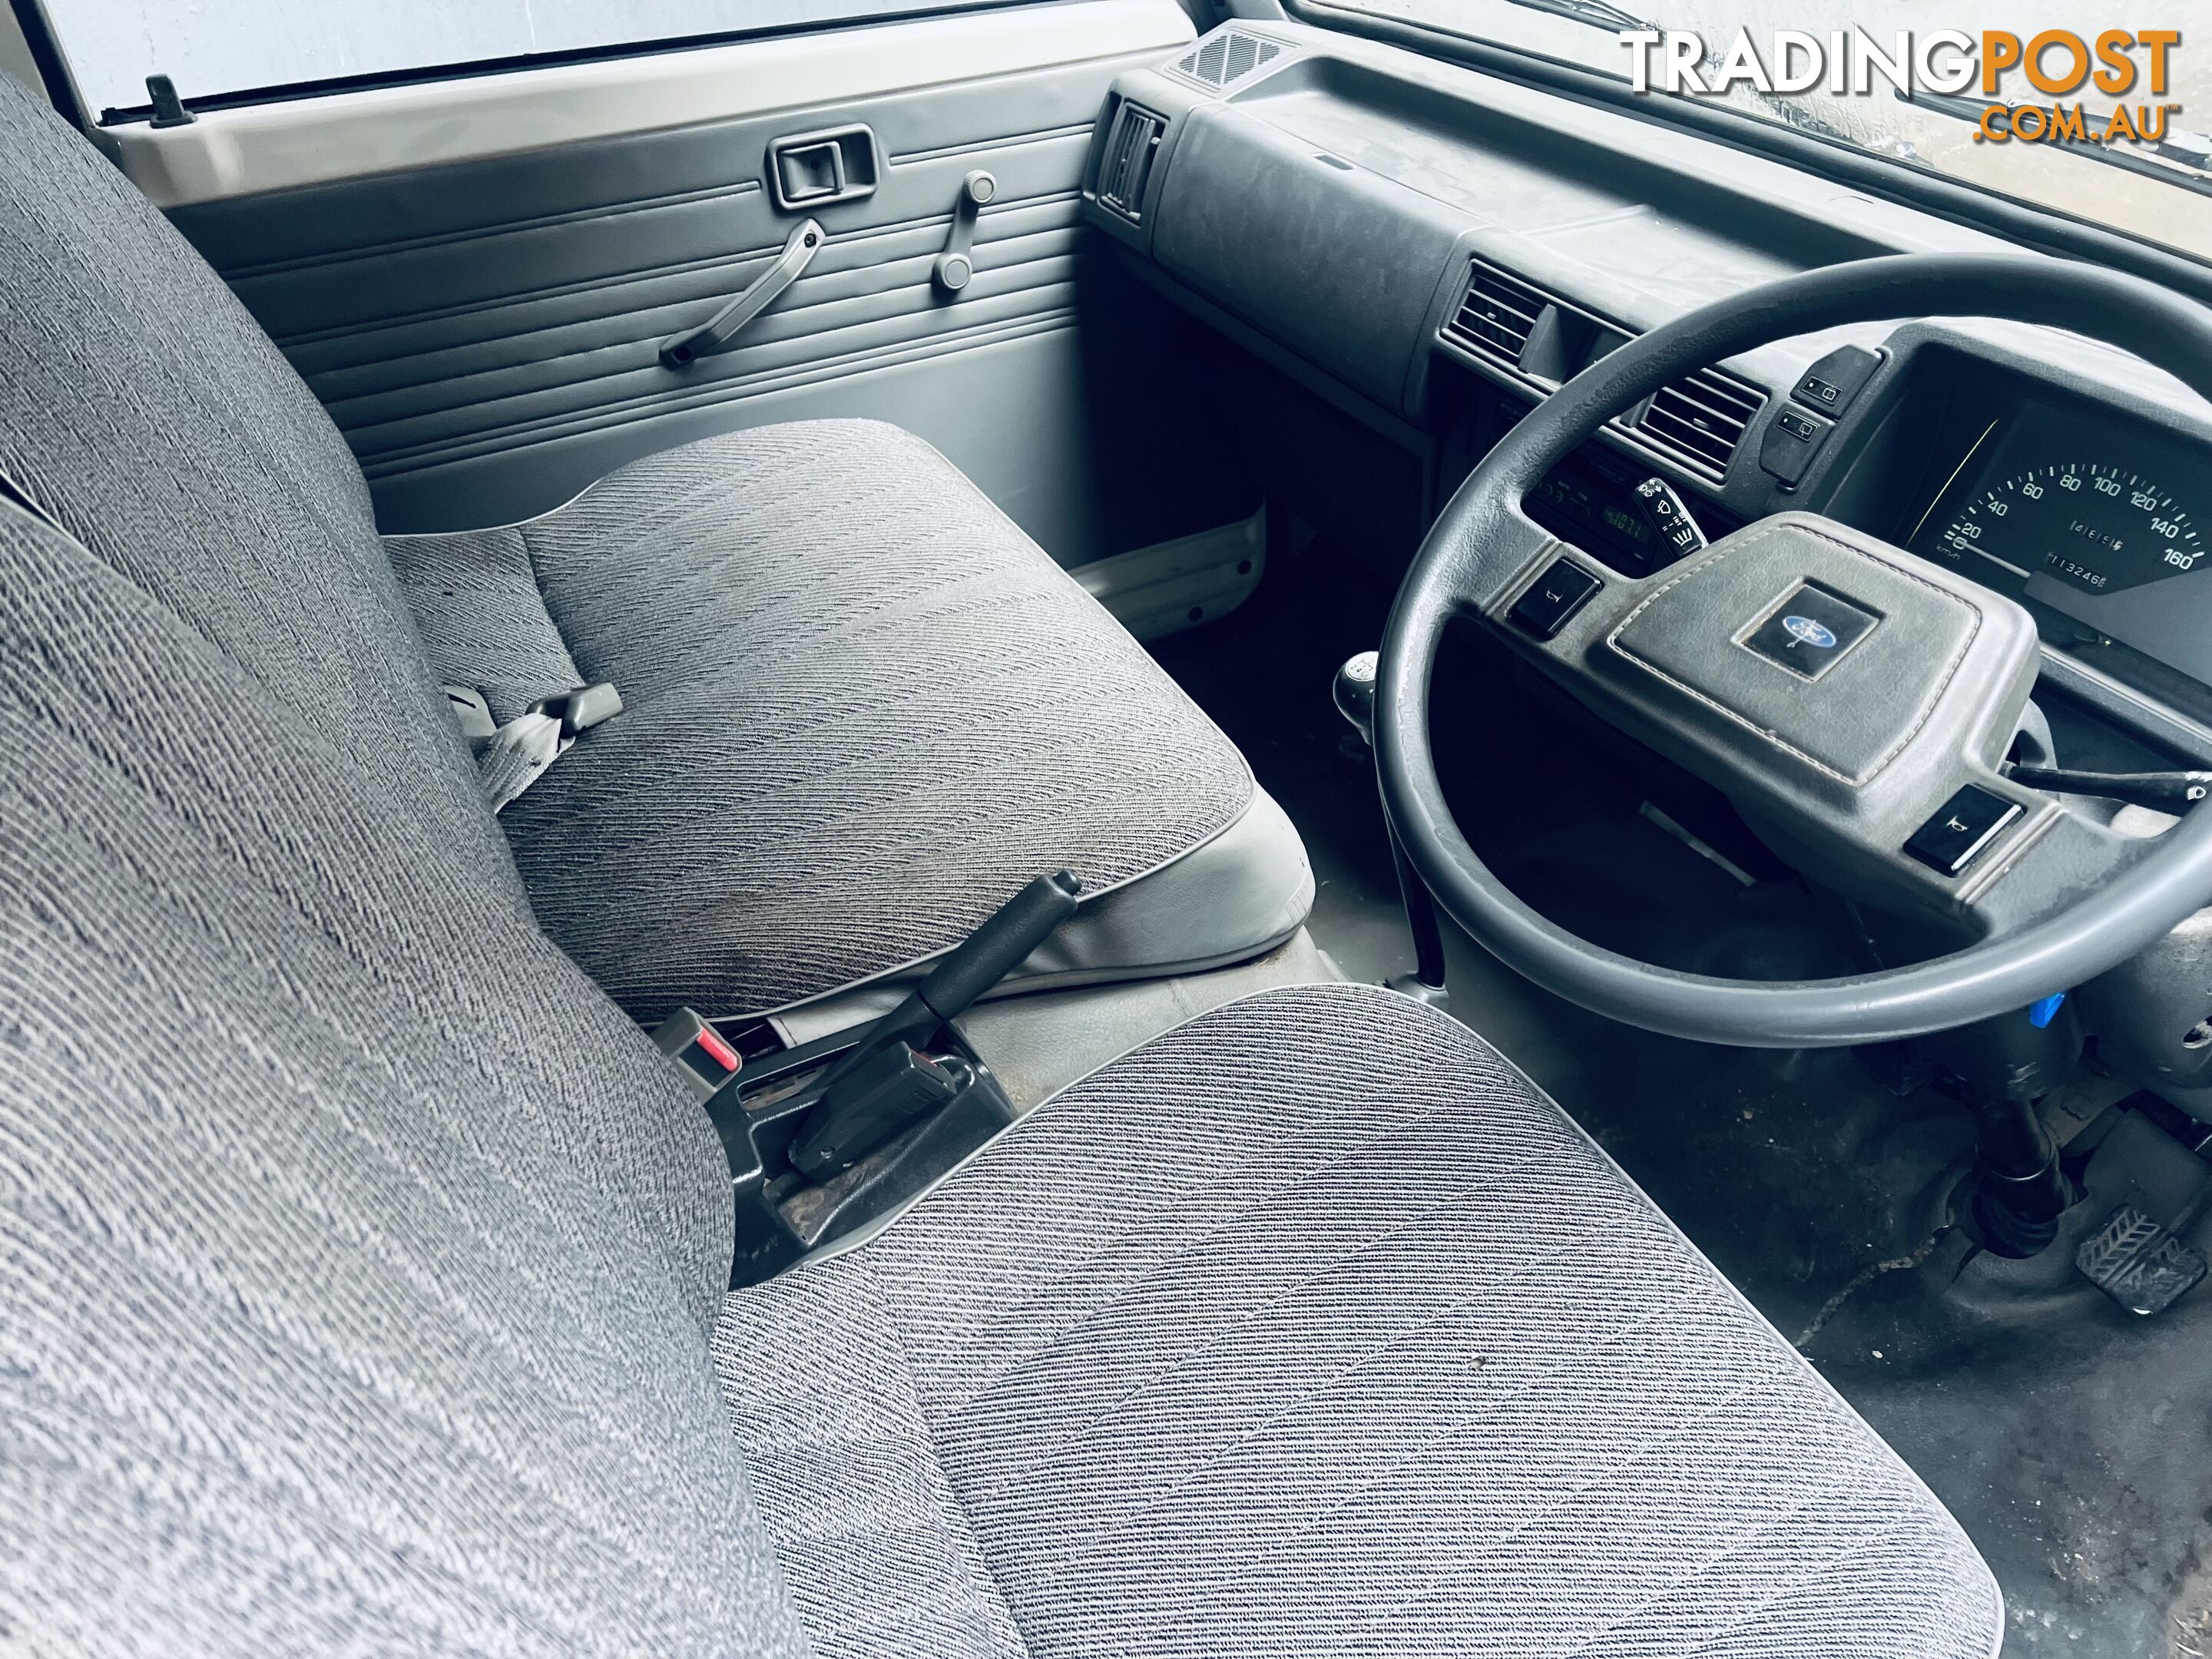 1997 Ford Econovan Van Manual